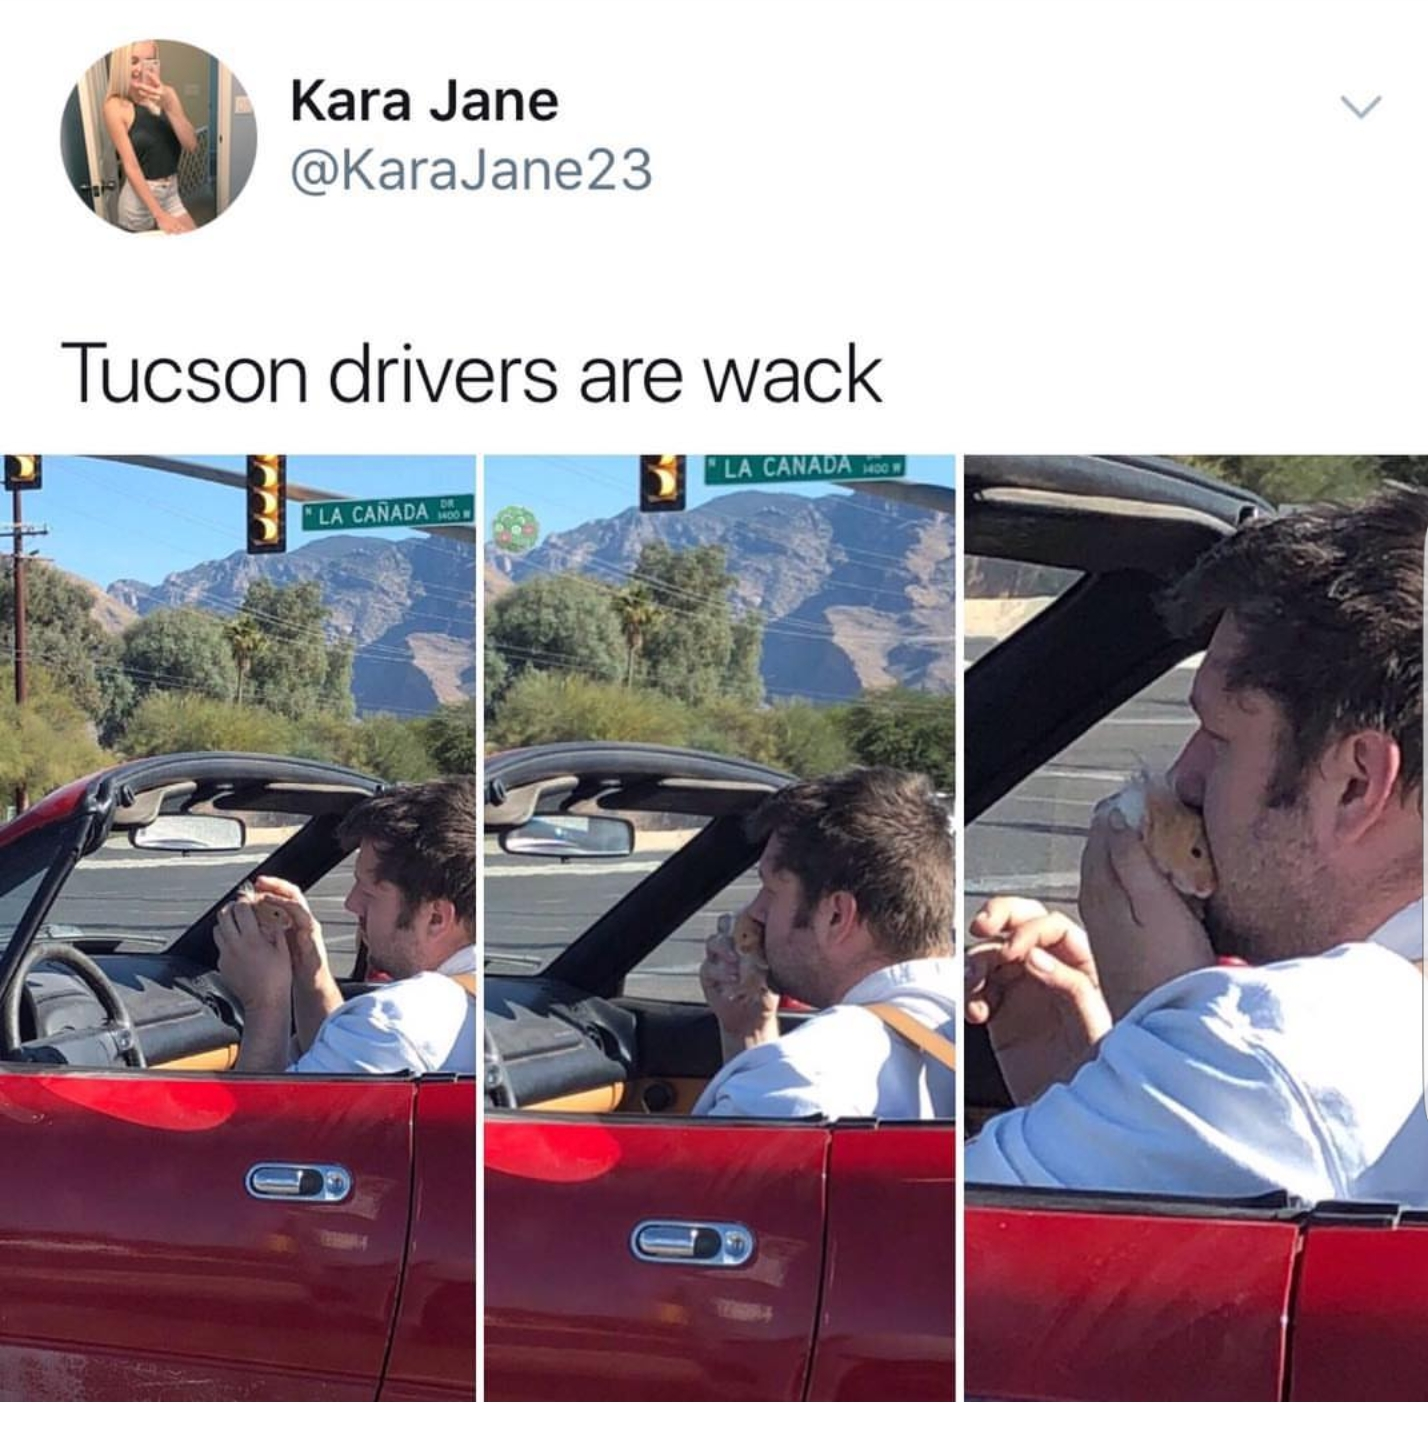 guy in car with hamster - Kara Jane Tucson drivers are wack La Cara